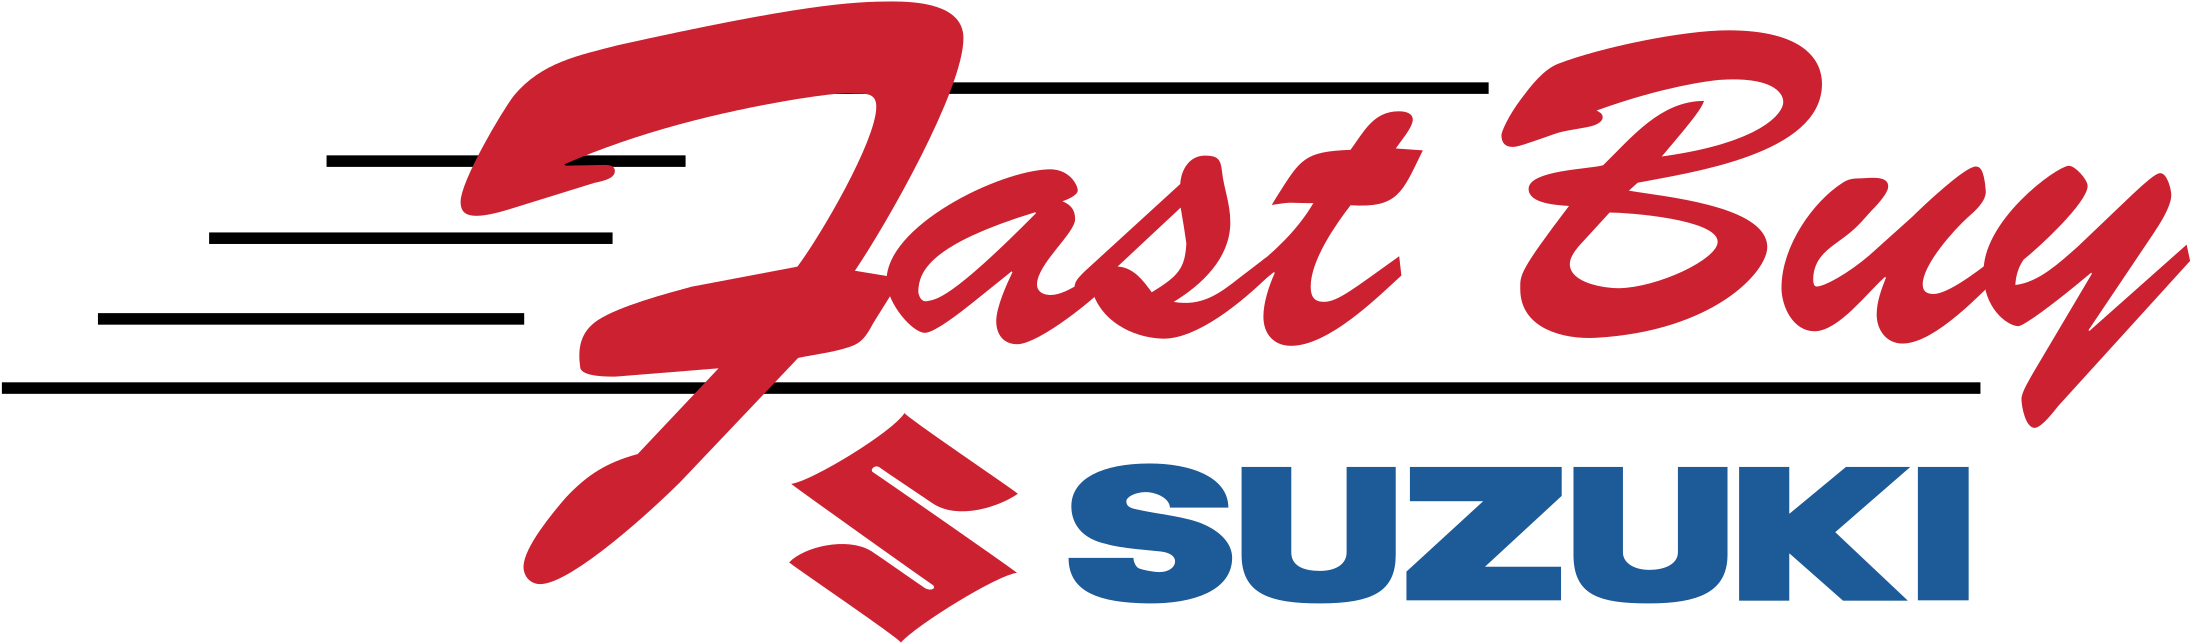 Suzuki Fast Buy Logo Design PNG image